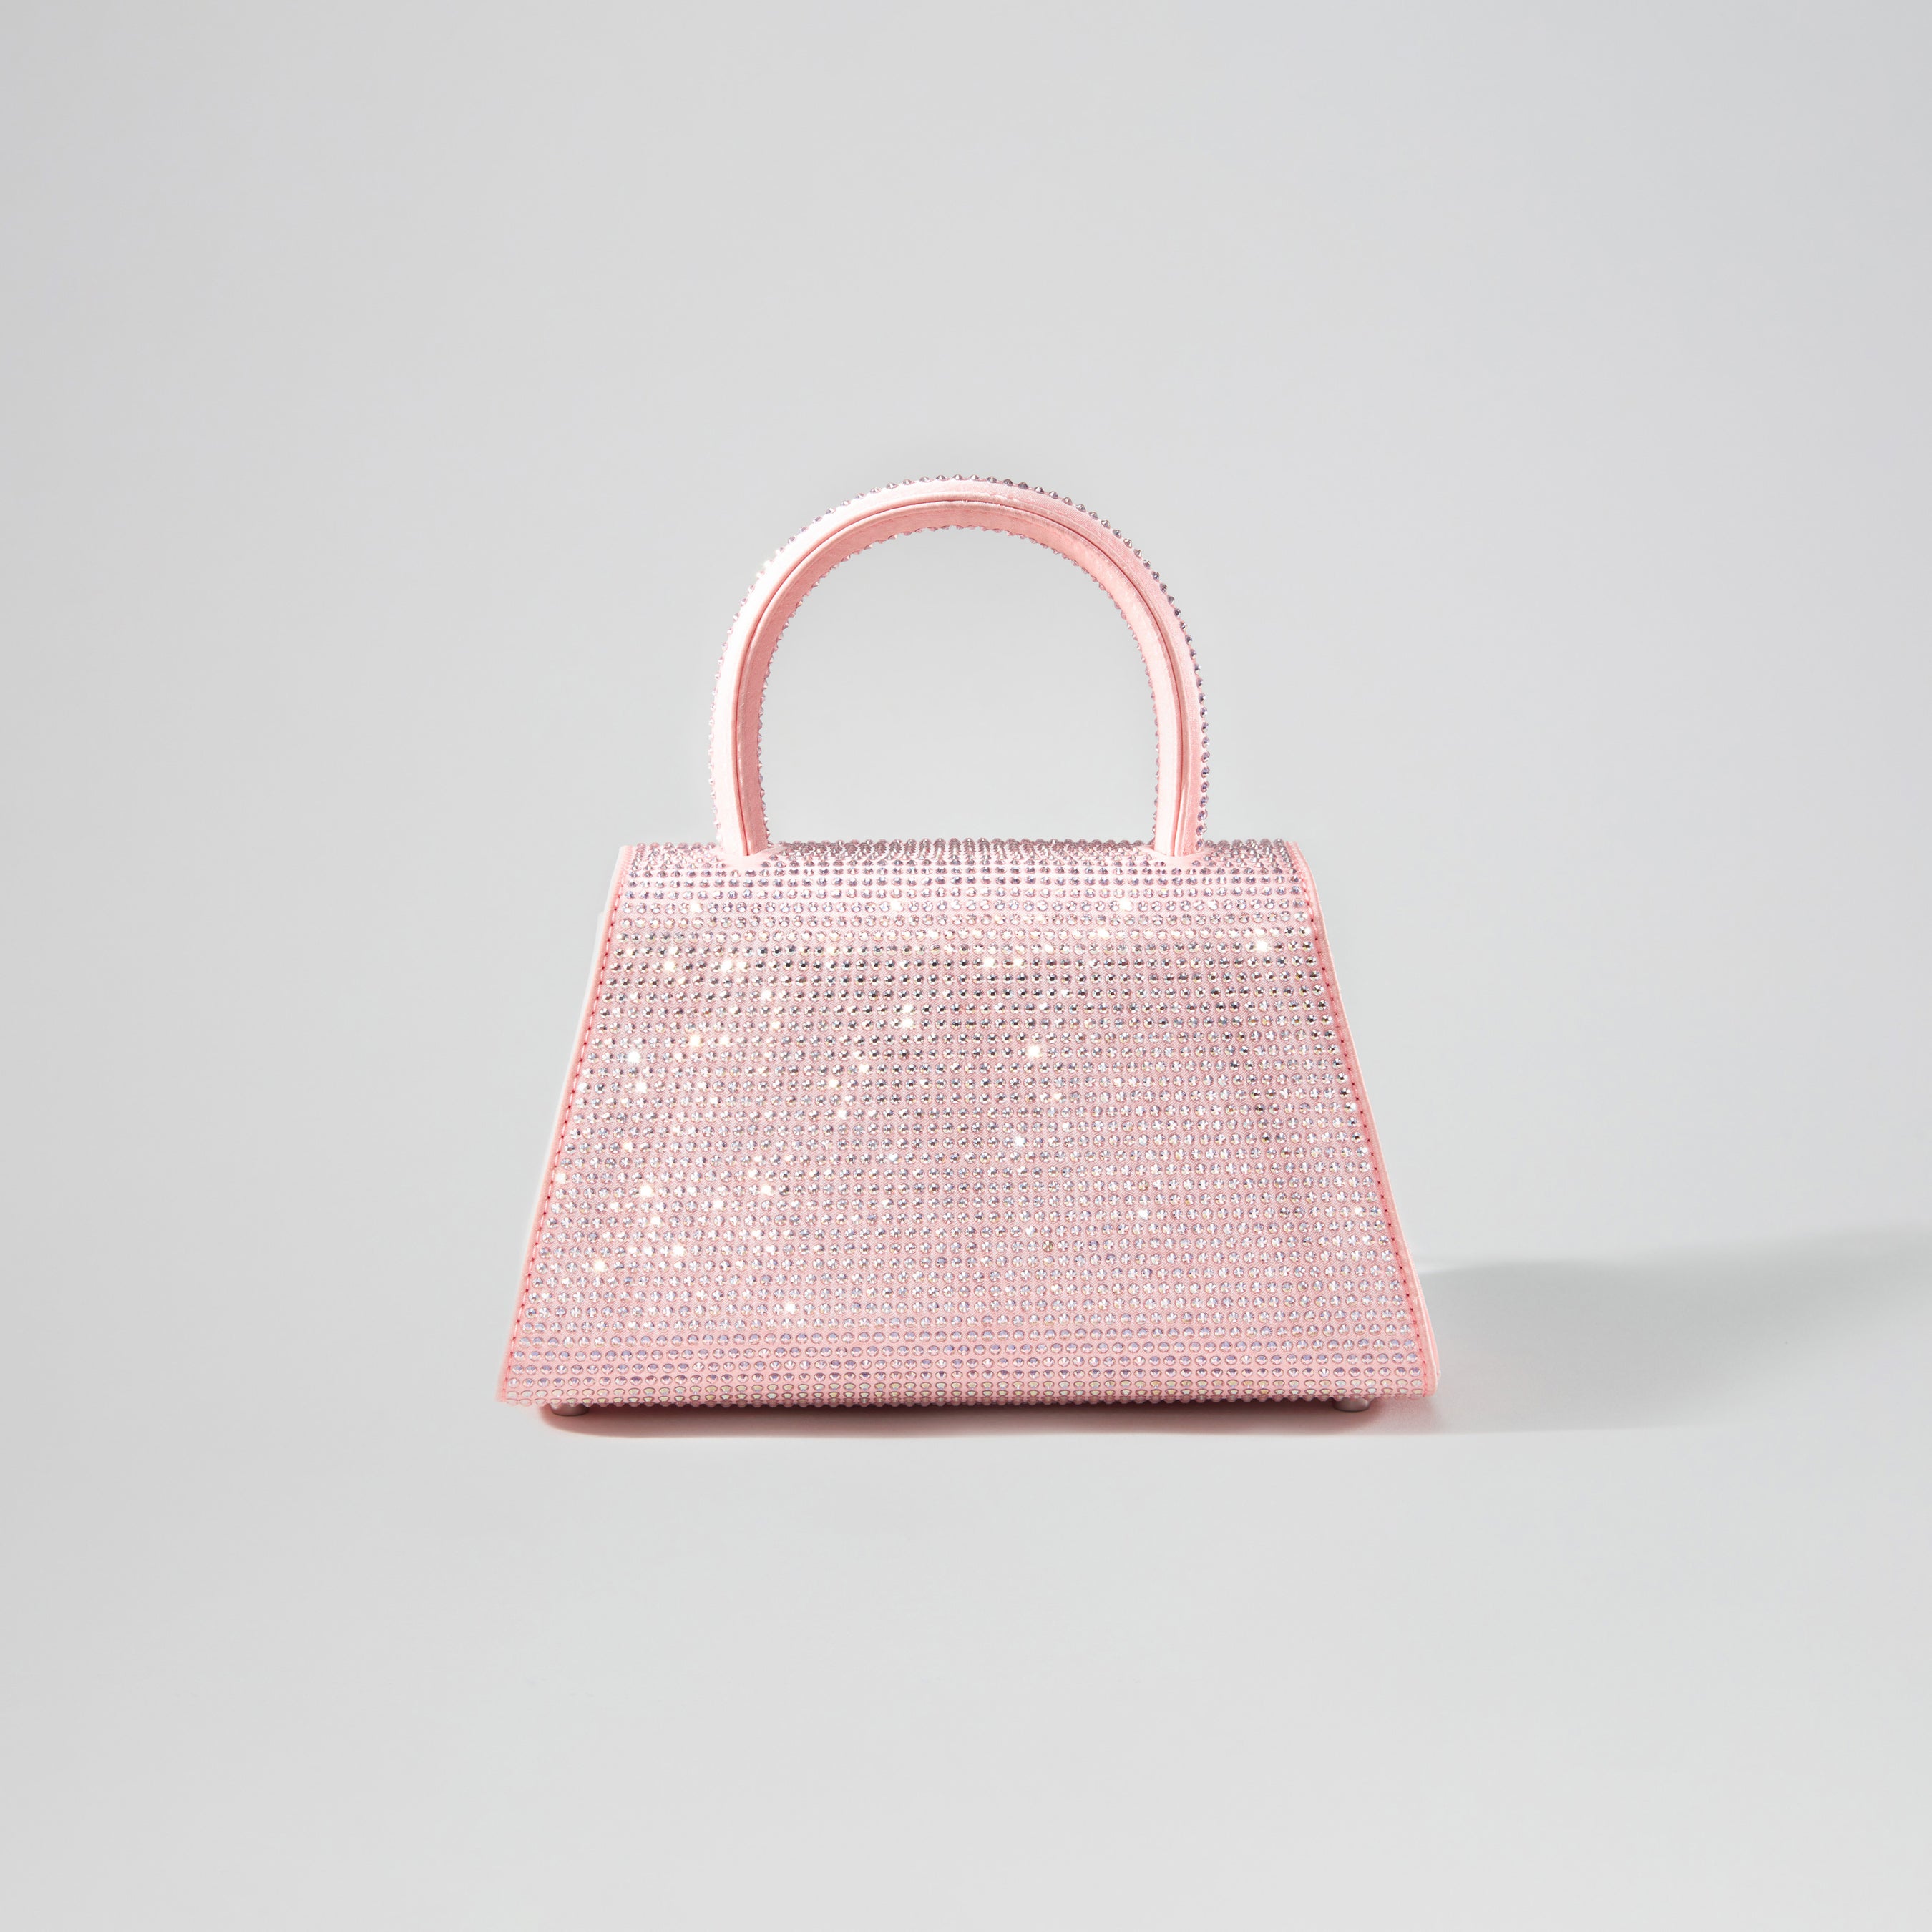 Pink Rhinestone Mini Bow Bag